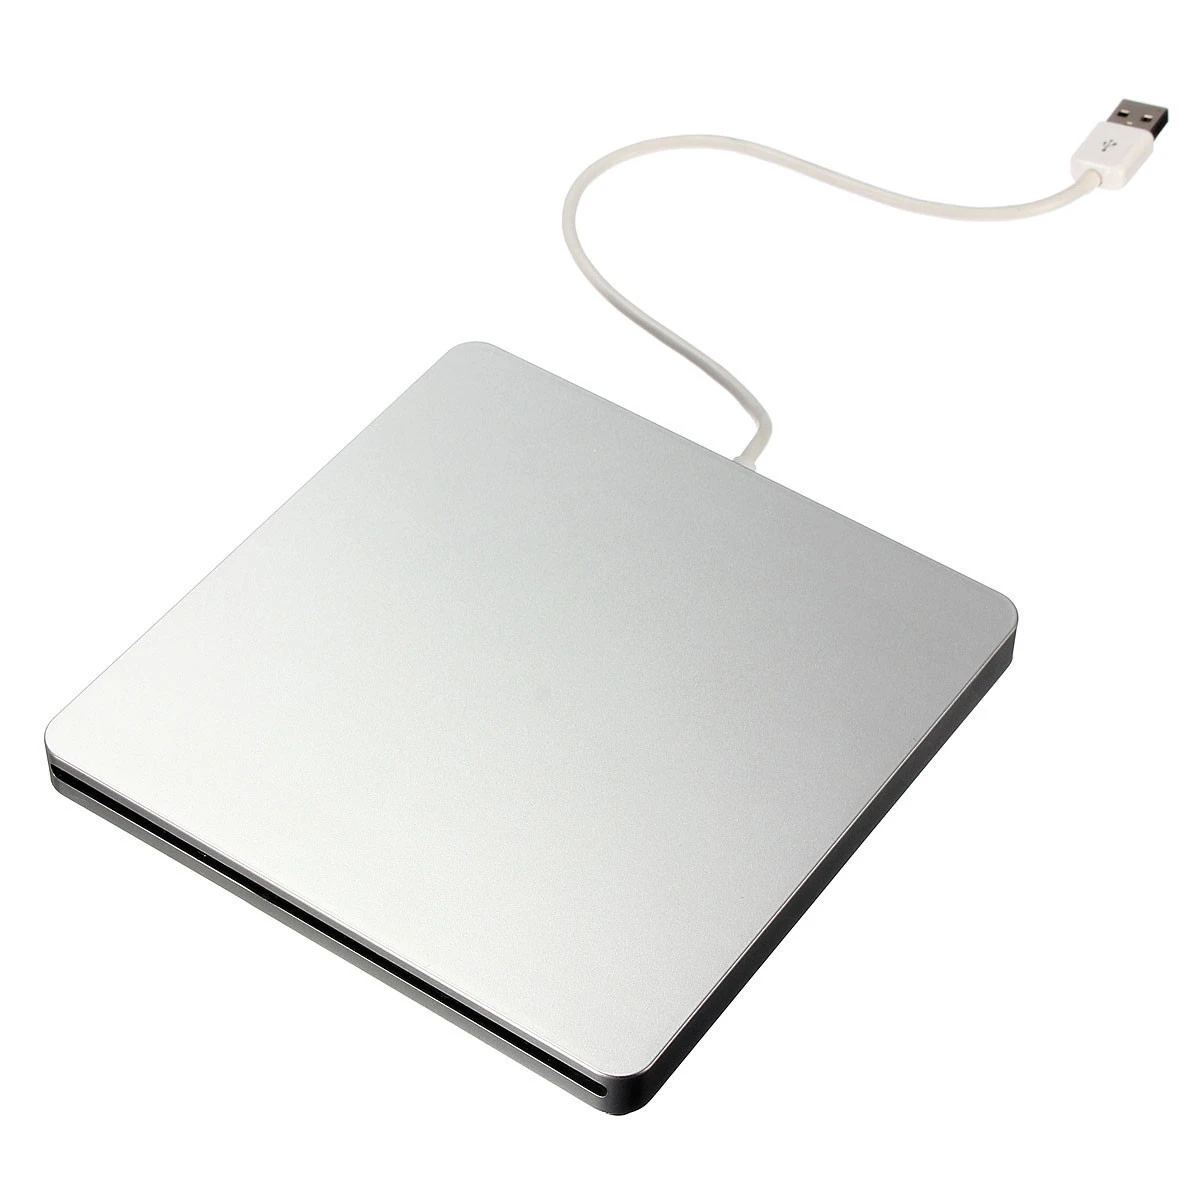 USB3.0 External CD DVD Burner DVD-ROM Optical Drive player Slot Loading Portatil for Windows 7 8 10 MACs Notebook